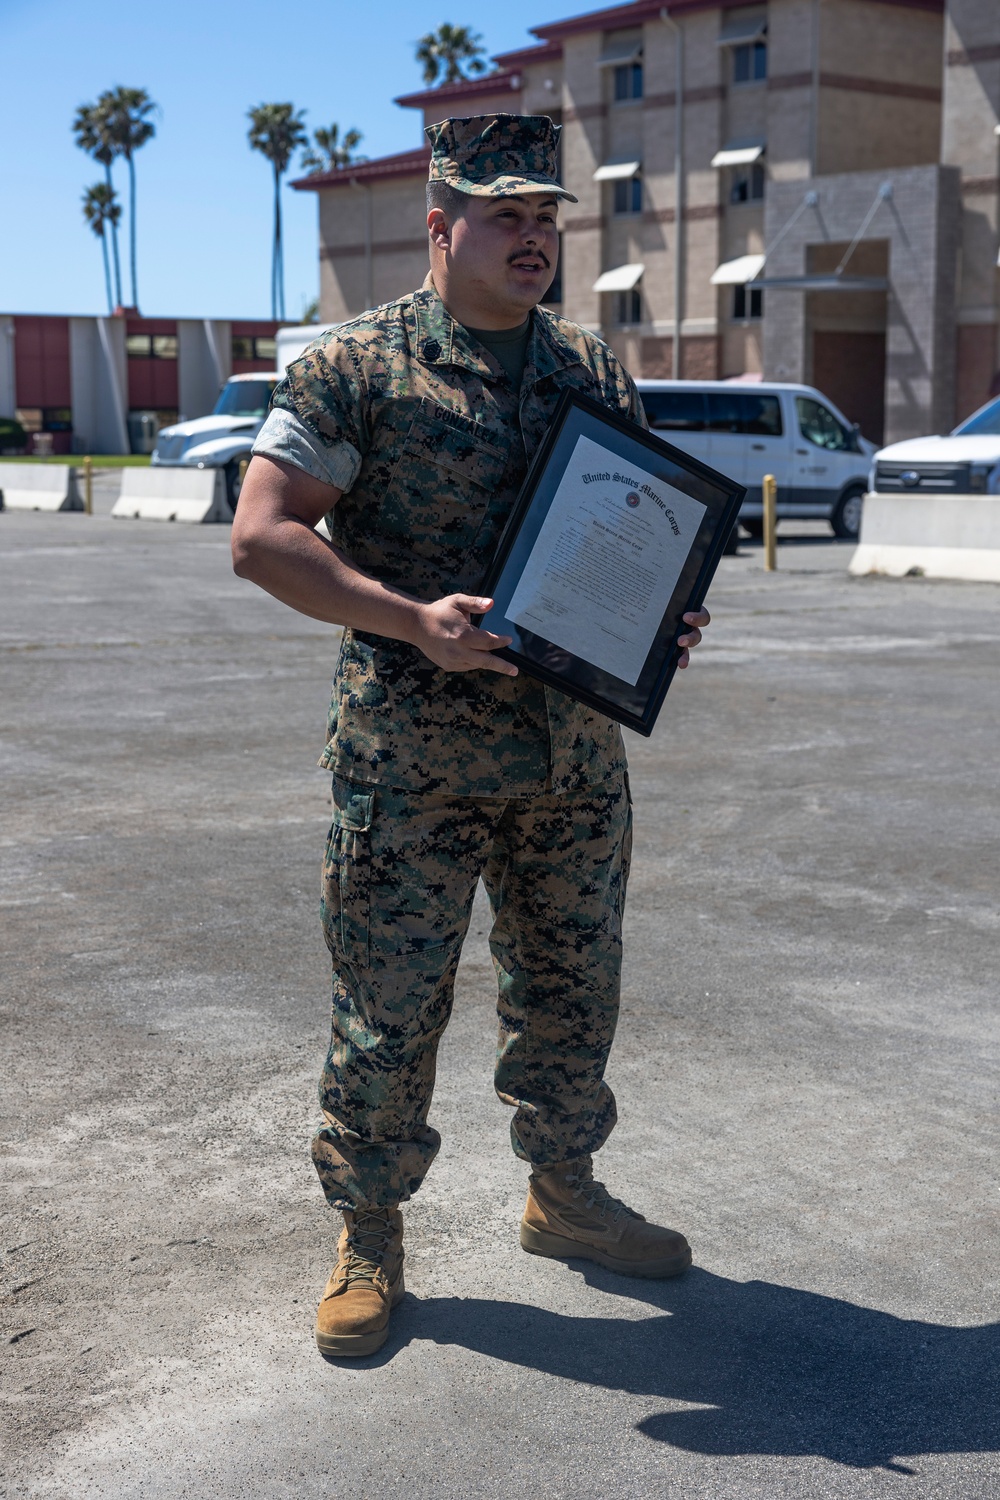 Gunnery Sgt. Gonzalez promotion